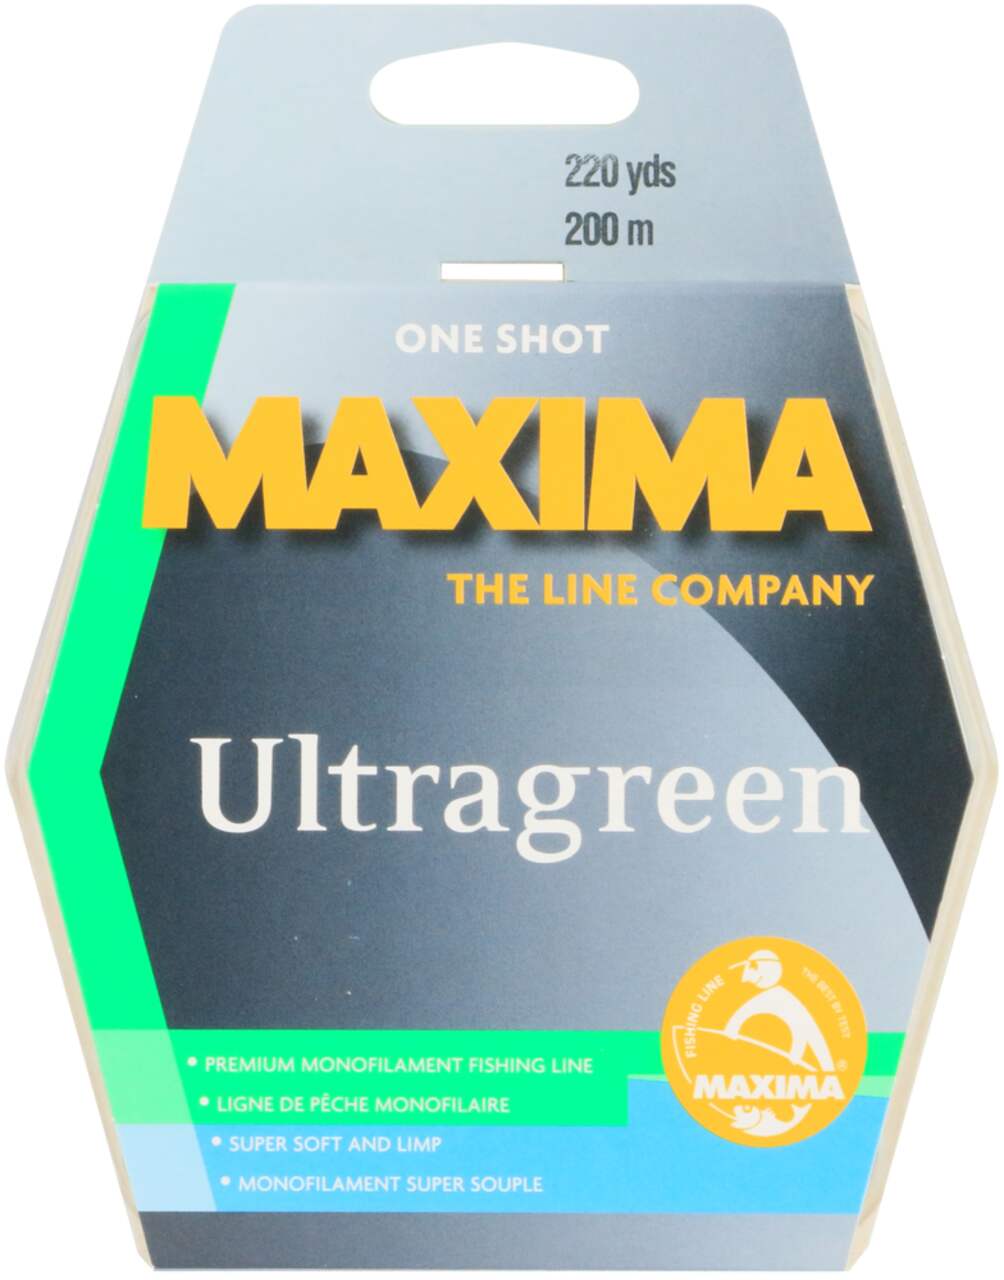 Maxima One Shot Ultragreen Monofilament Fishing Line, Grren